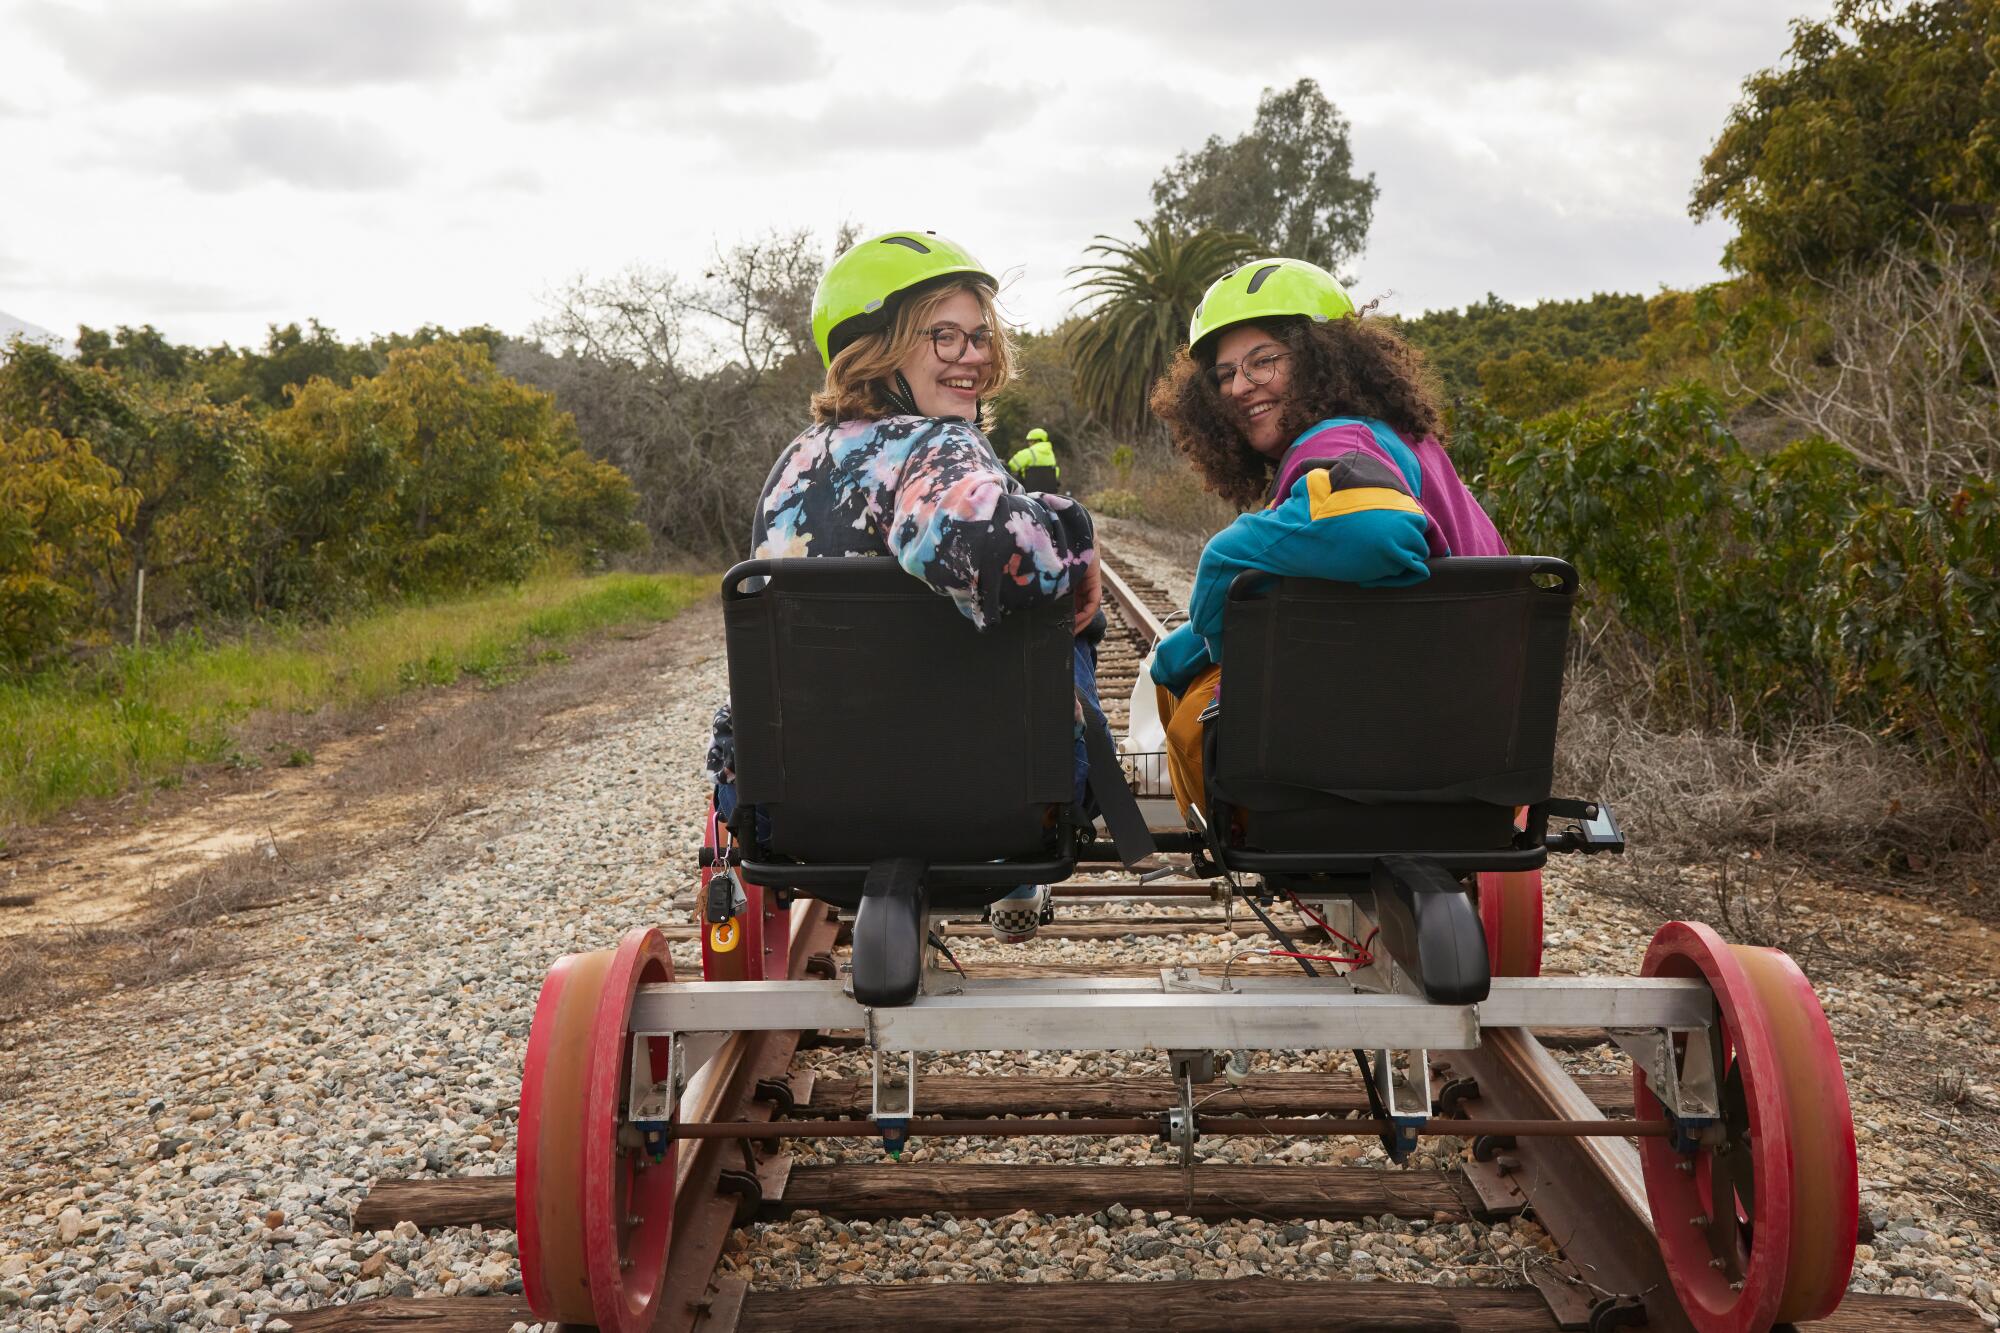 Julia Carmel and Reanna Cruz looking backward from their railbike, smiling at the camera.